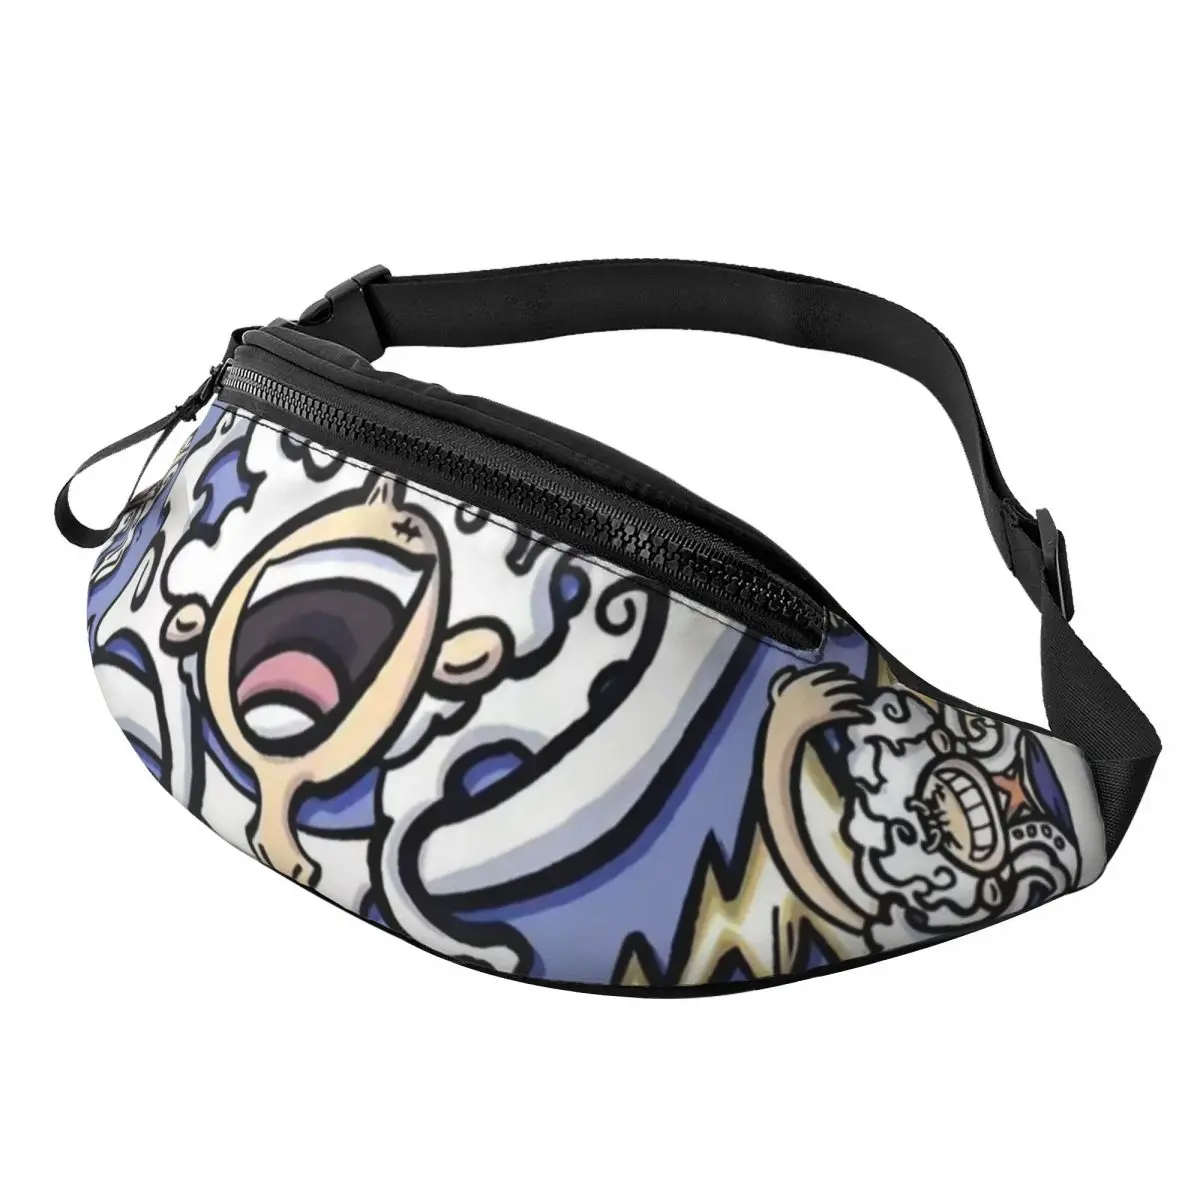 

Nika Gear 5 Cartoon One Piece Waist Bag with Headphone Hole Belt Bag Fashion Hip Bum Bag for Outdoor Casual Travelling Hiking Cy